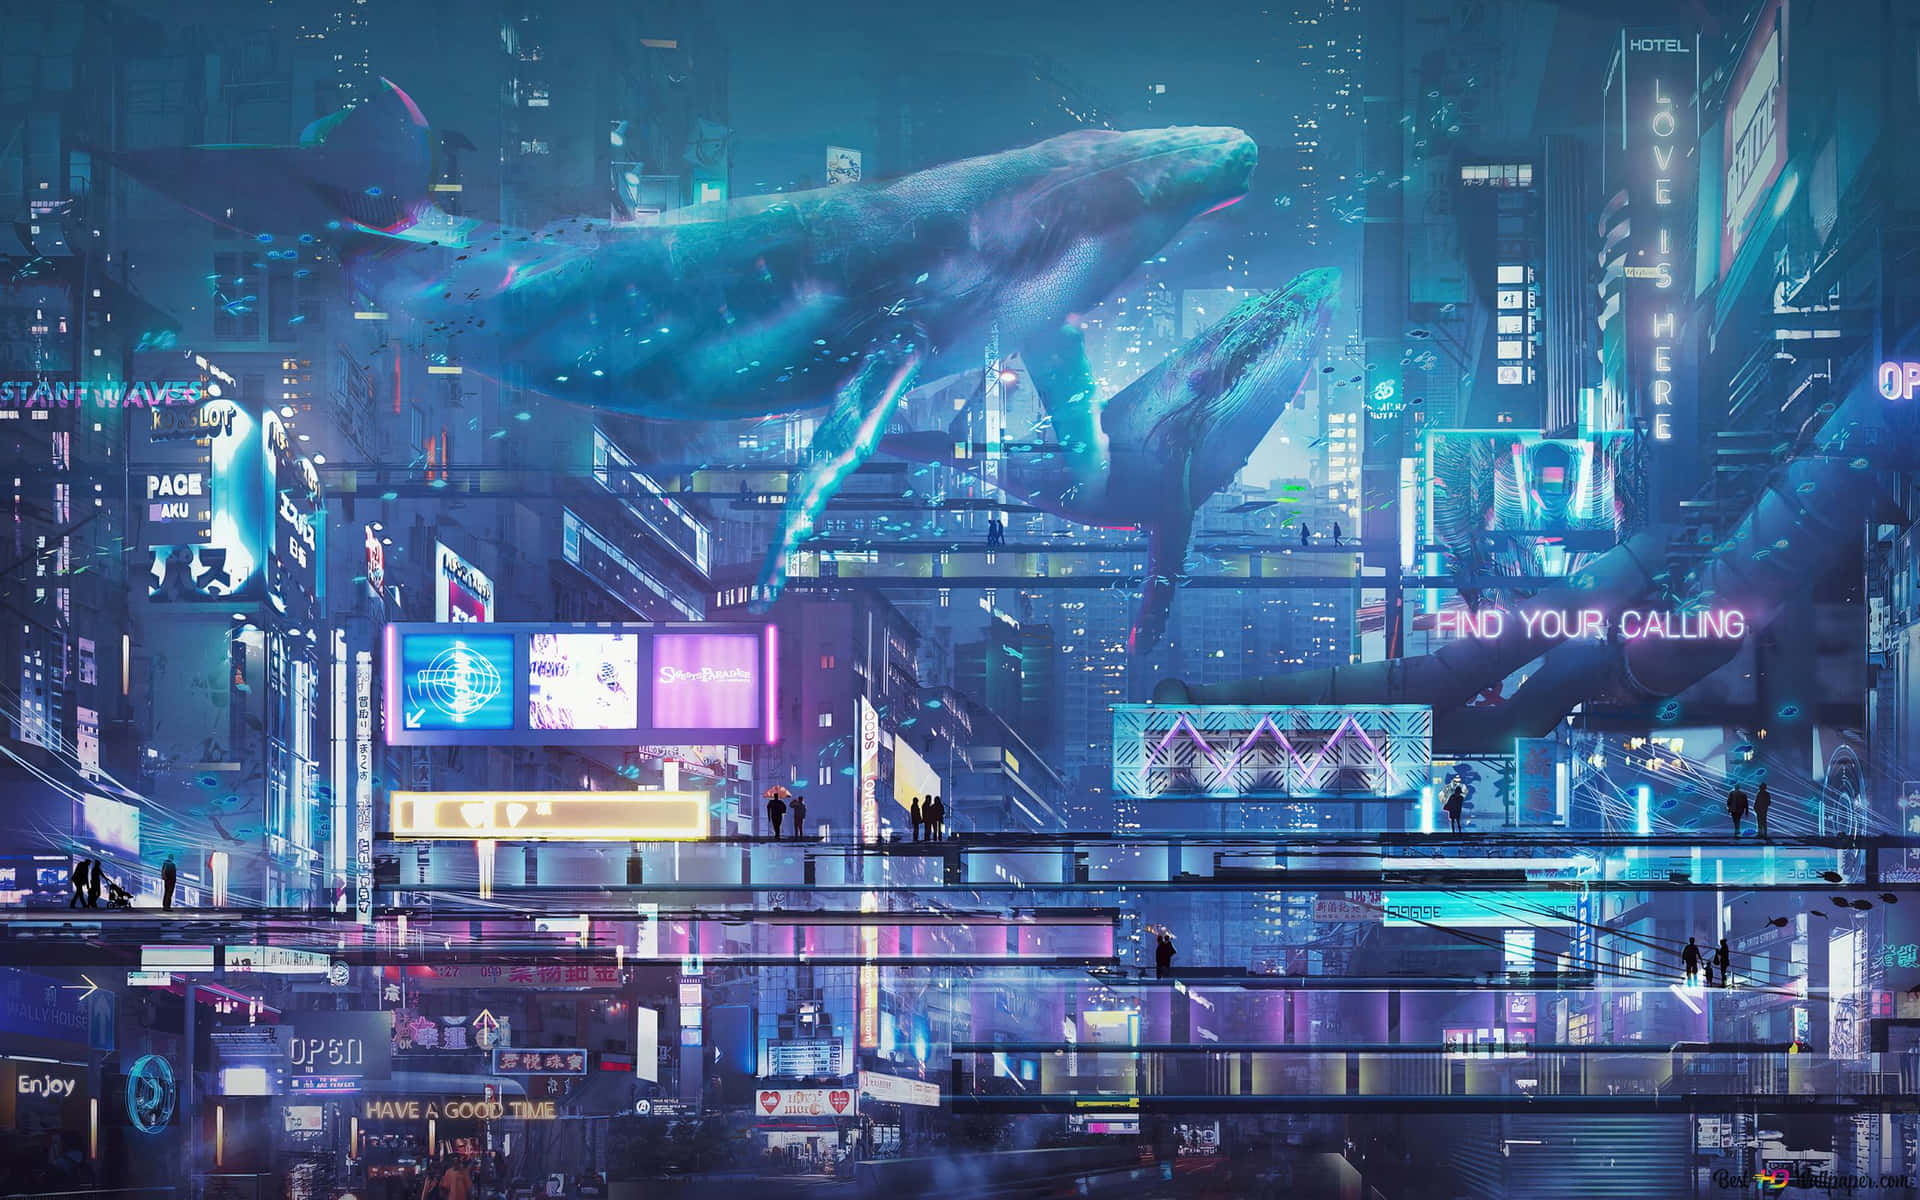 Explore the sprawling cyberpunk city of Night City! Wallpaper